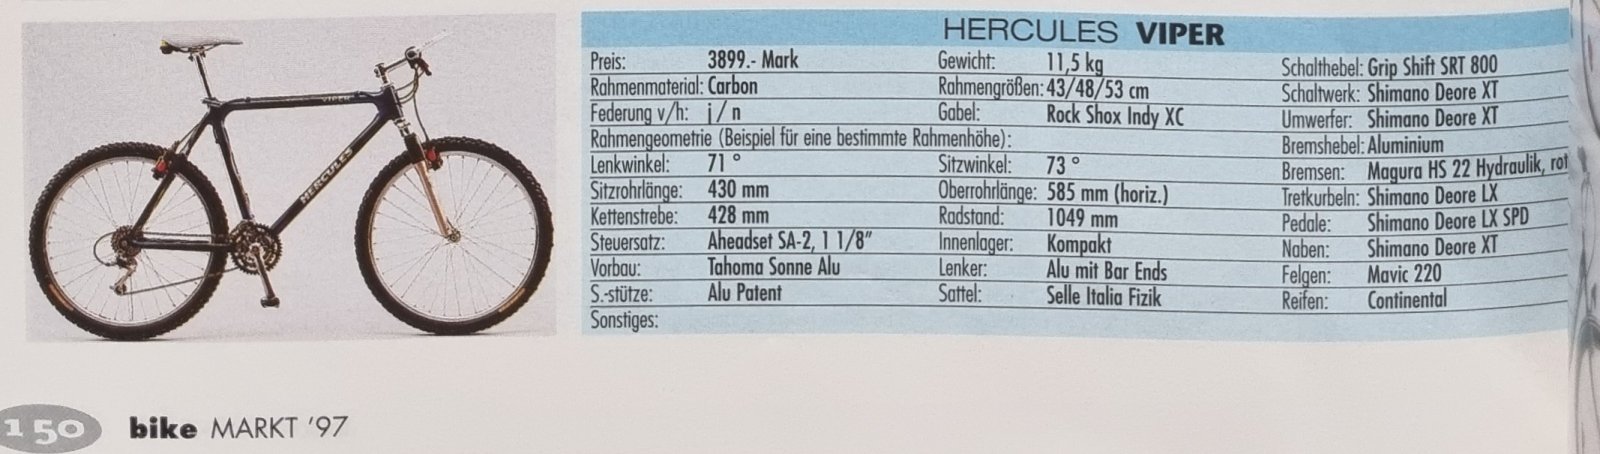 Hercules Viner Carbon aus BM1997.jpg